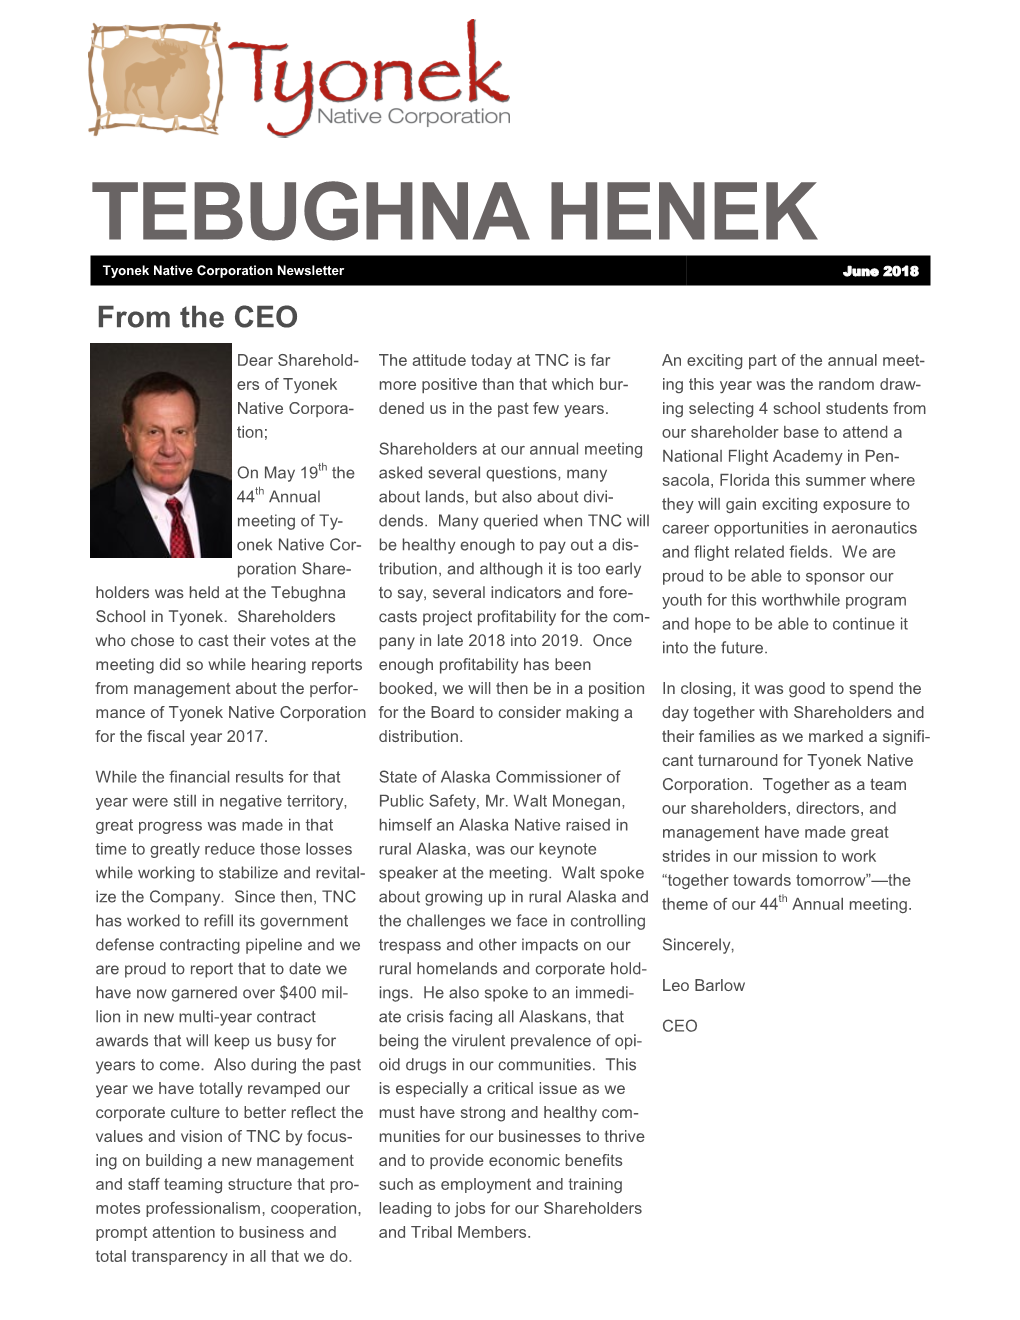 TEBUGHNA HENEK Tyonek Native Corporation Newsletter June 2018 from the CEO